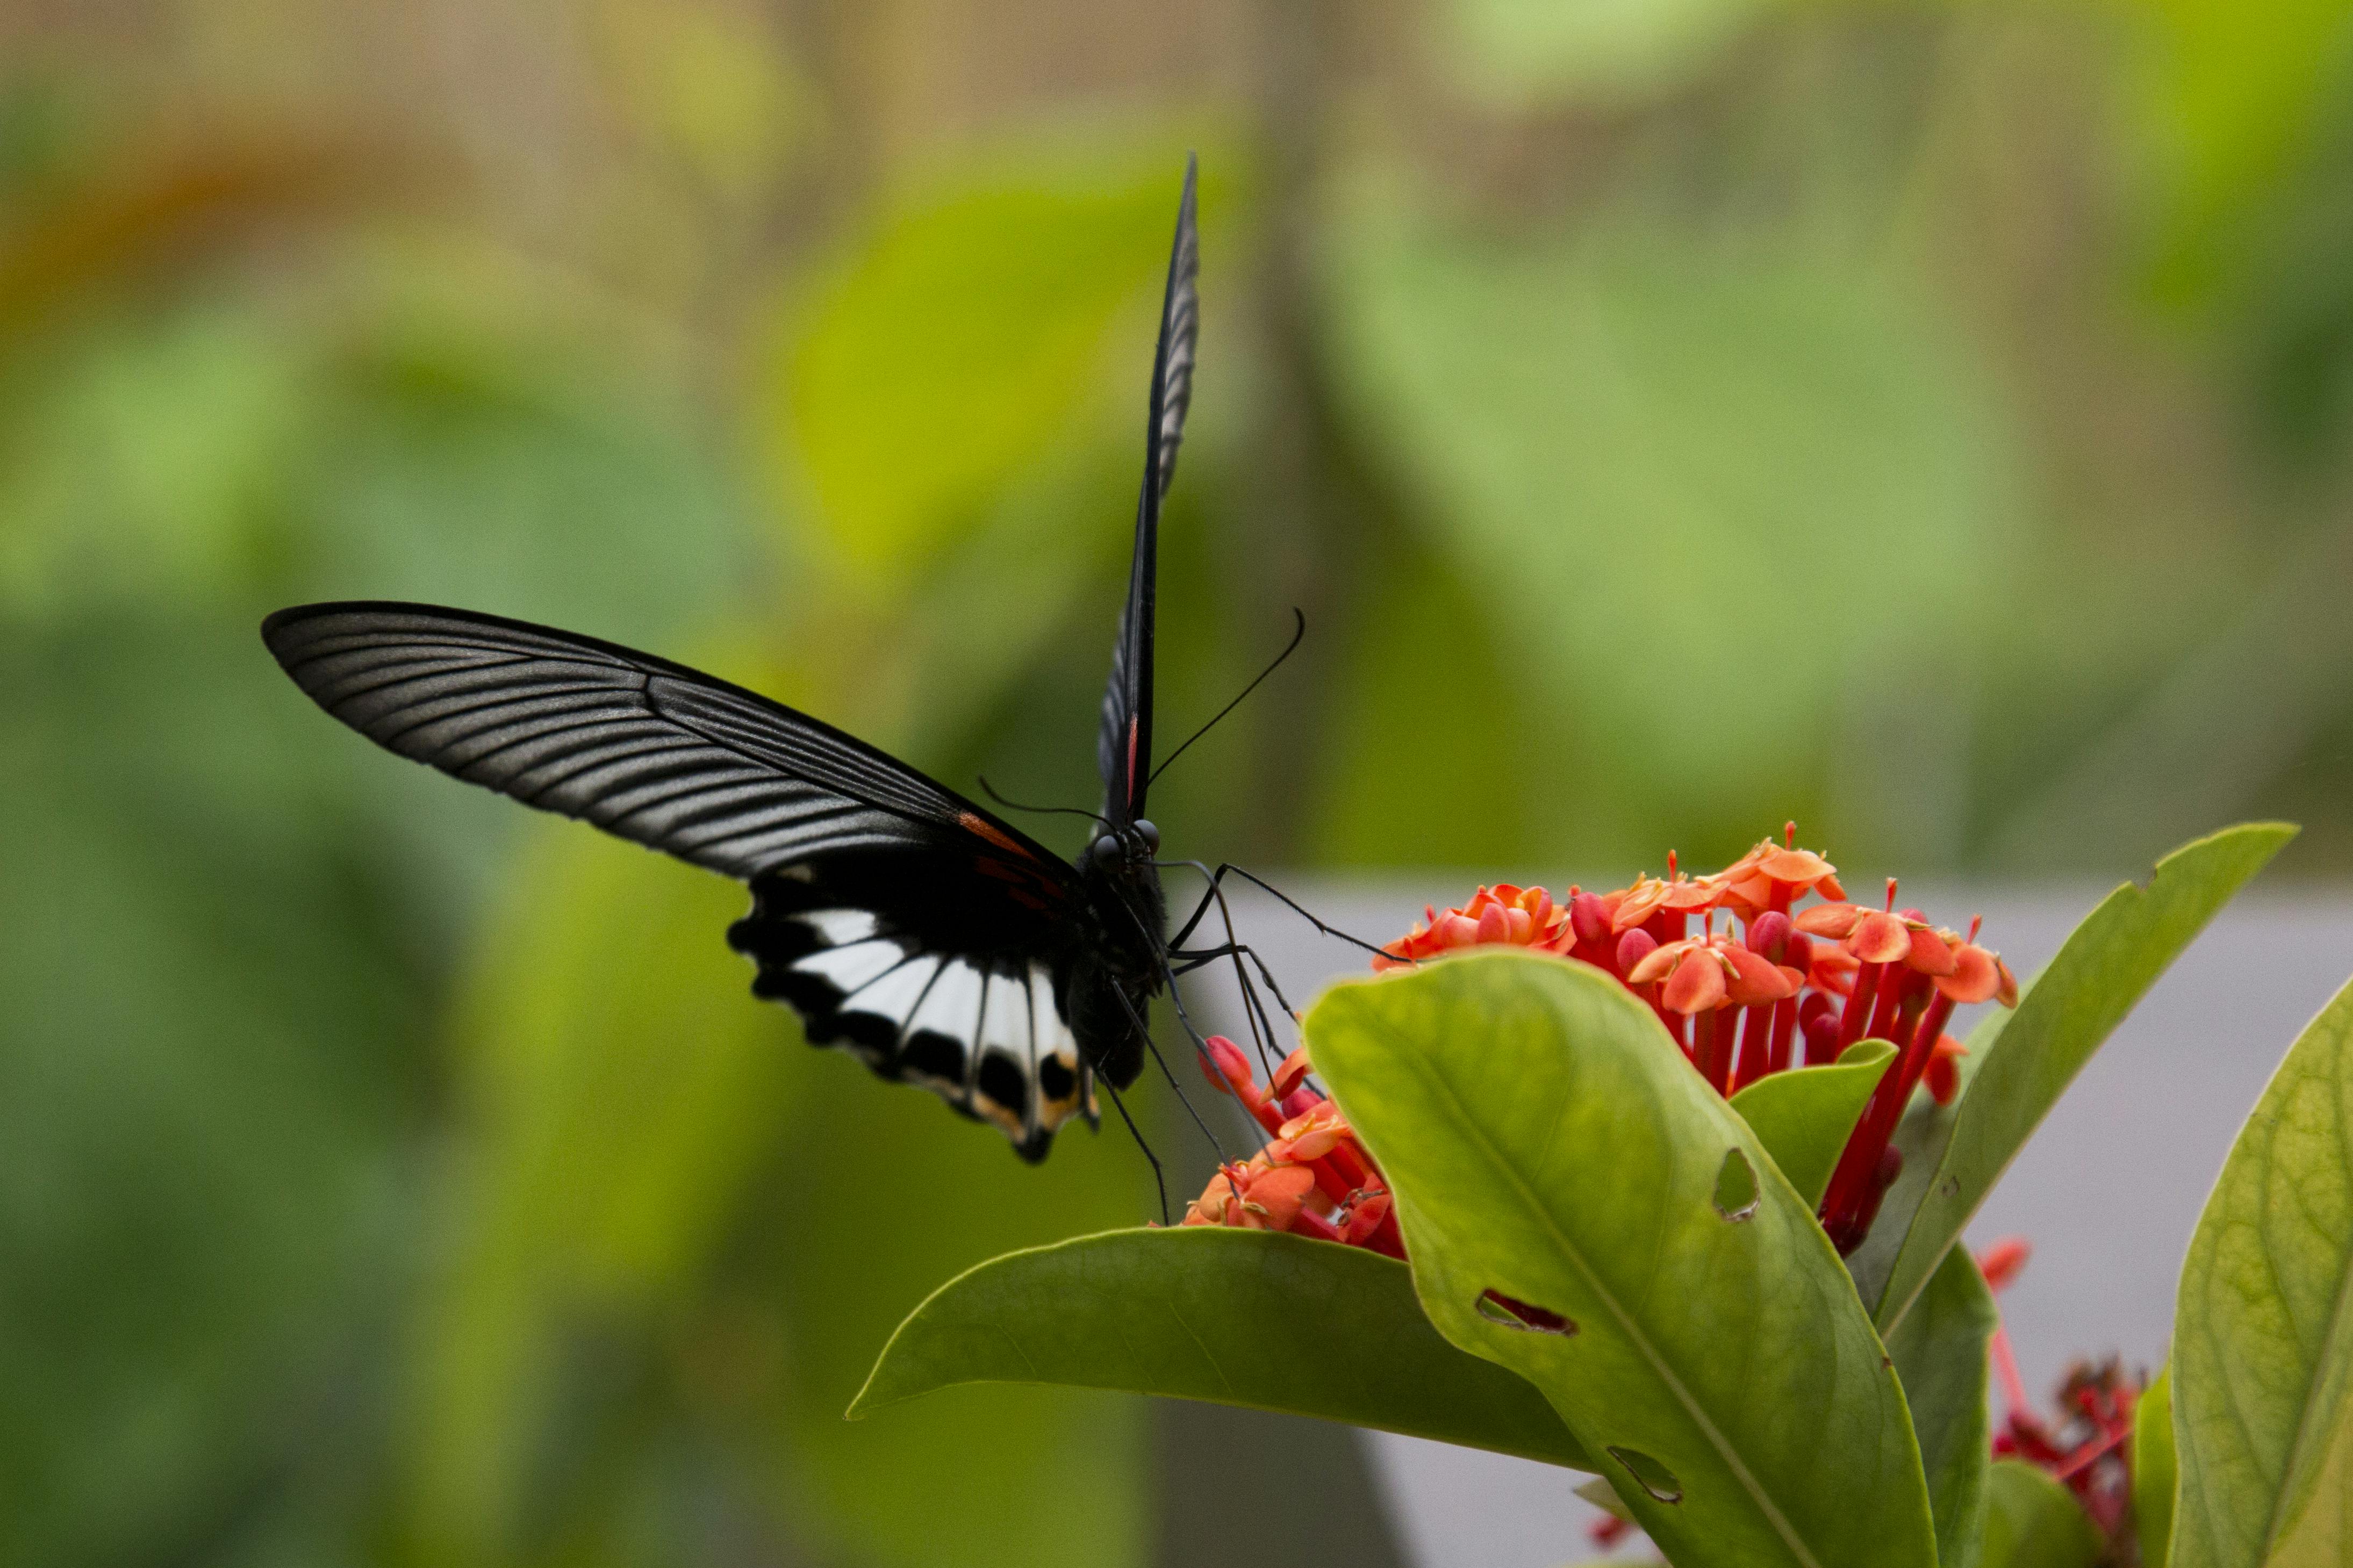 Butterfly with flower in Mai Chau, Vietnam. Creative Commons, G. Macfadyen, 2016